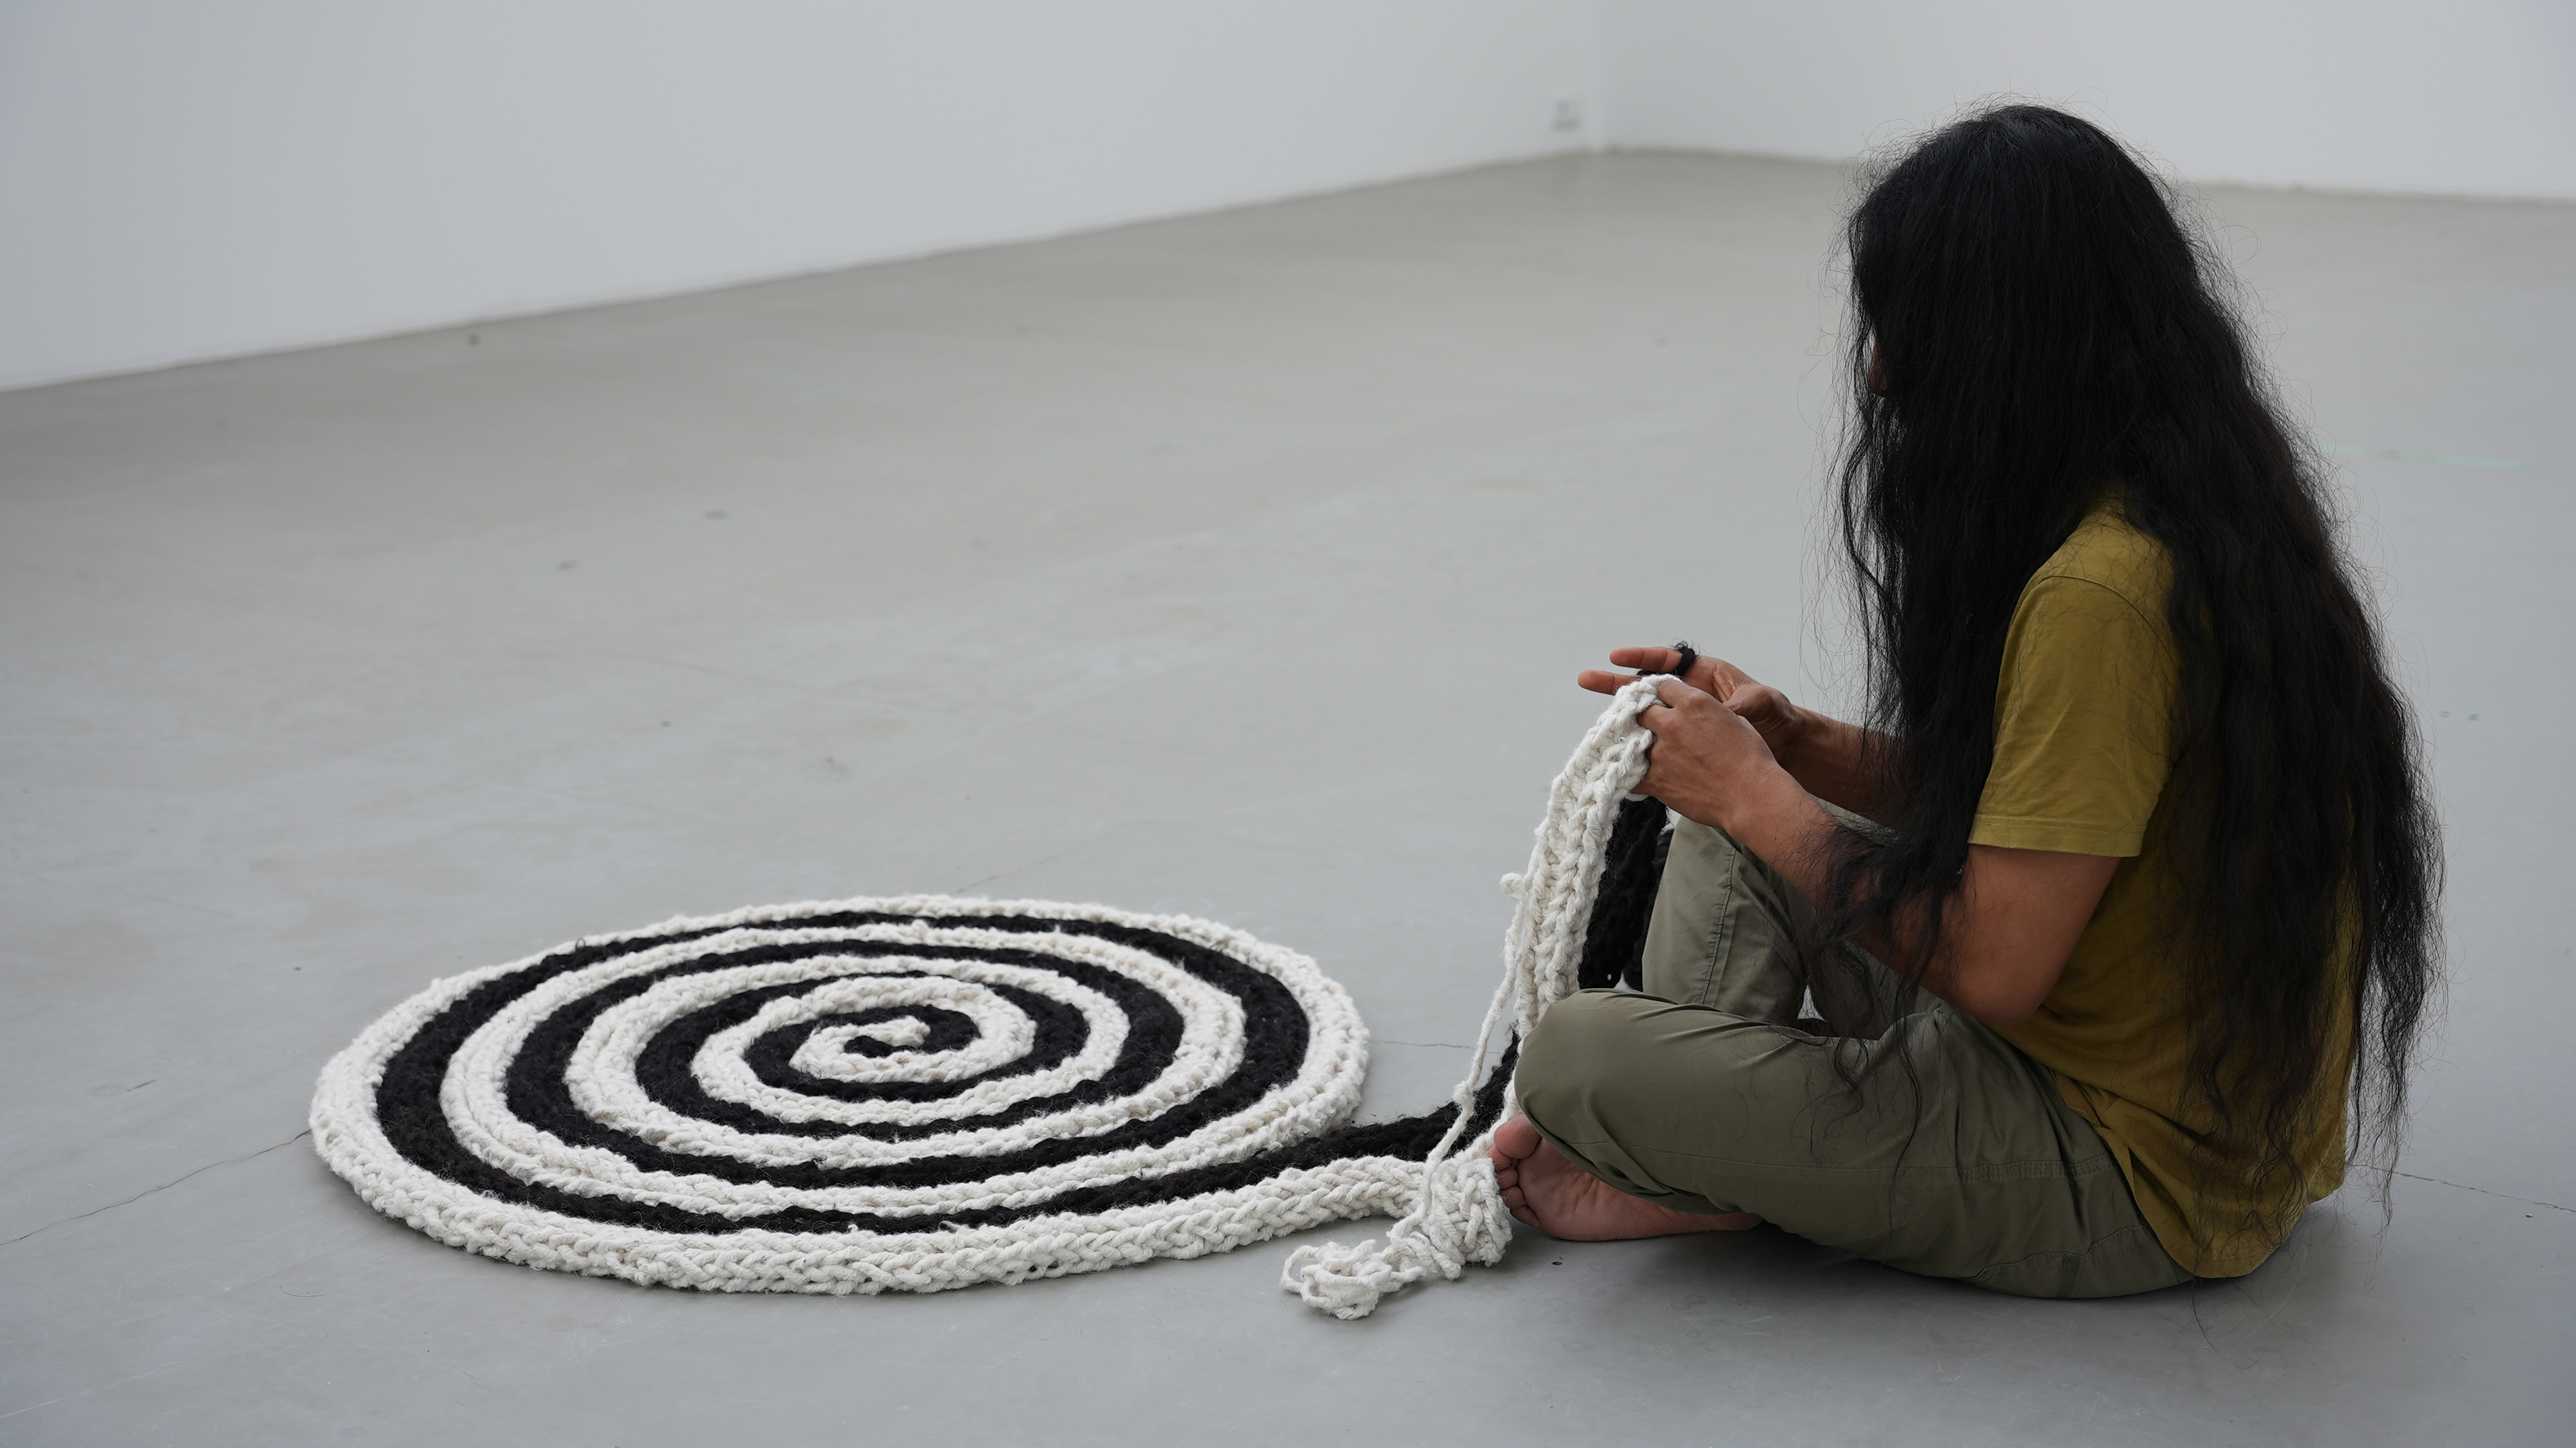 Galerie Barbara Thumm \ Antonio Paucar – Weaving and uniting silenced voices